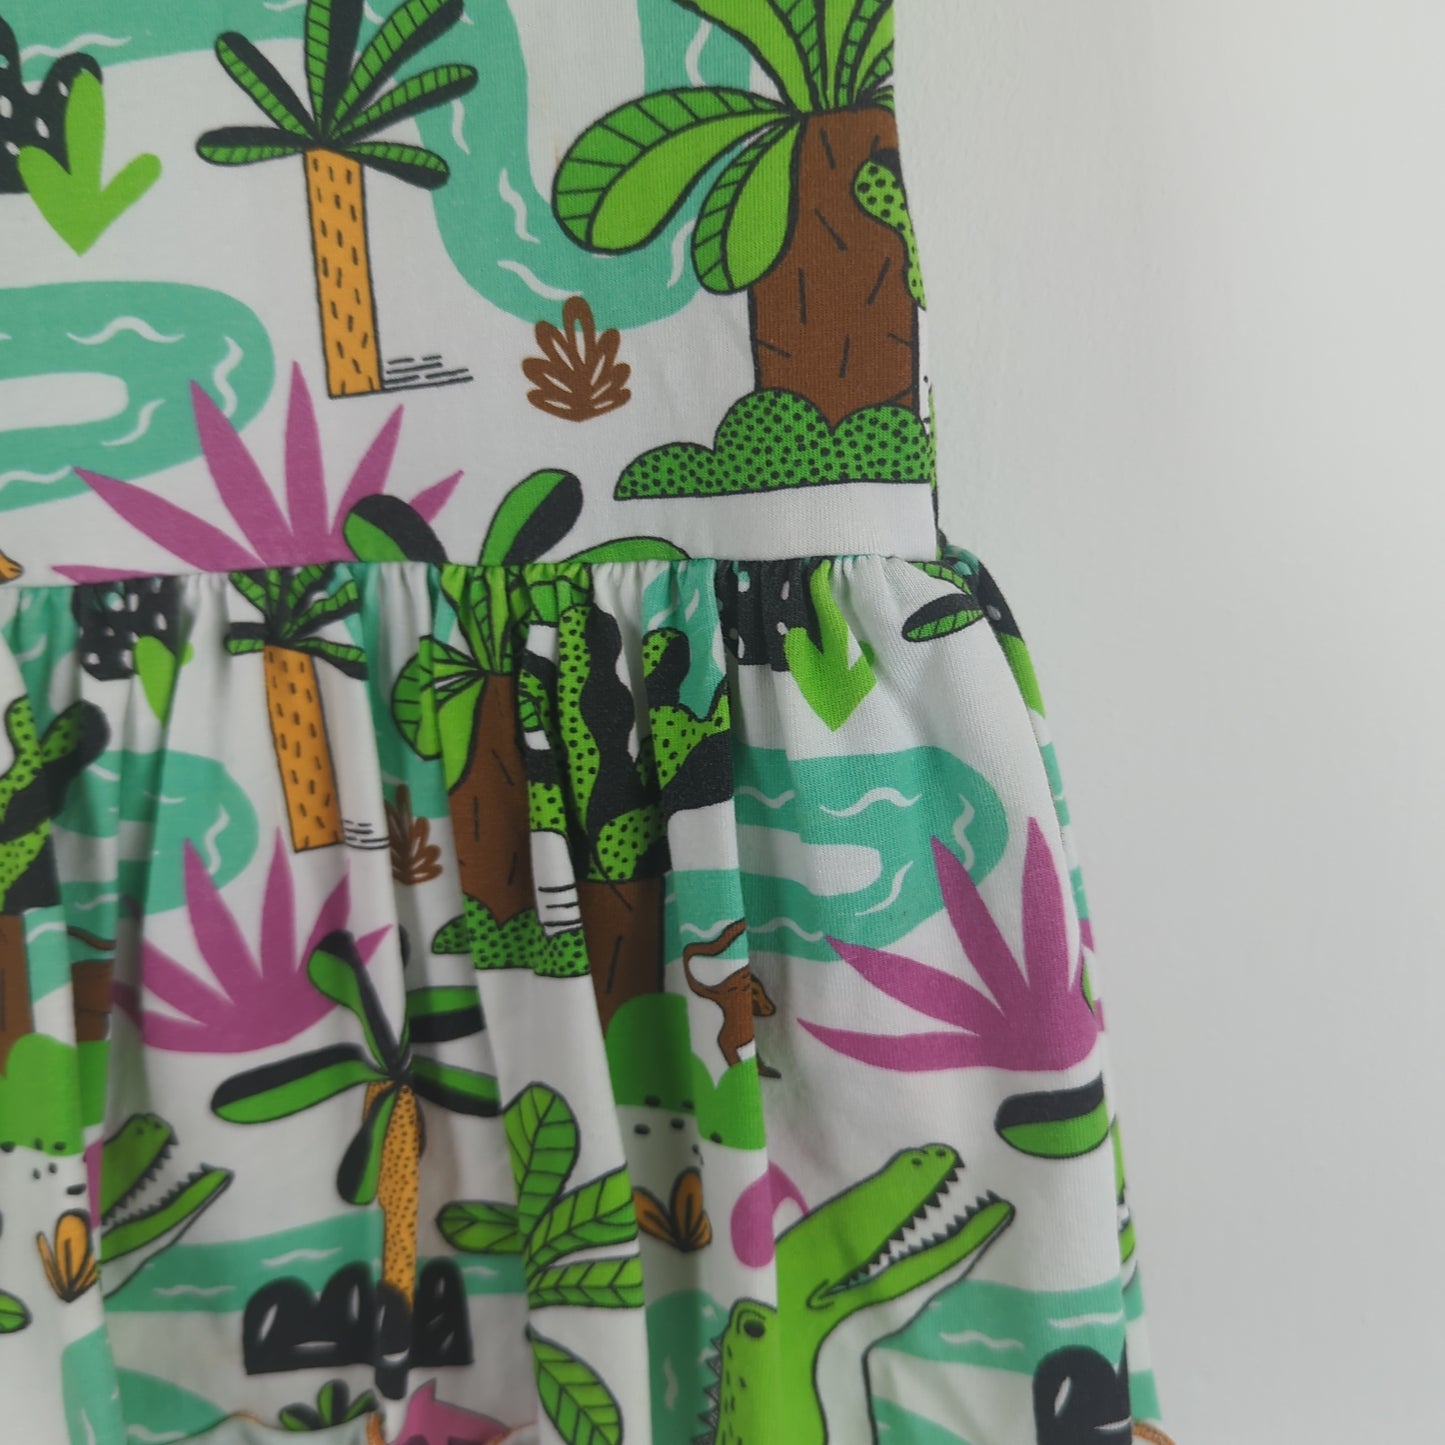 Preloved Raspberry Republic Dress - Tropical (9-18m)